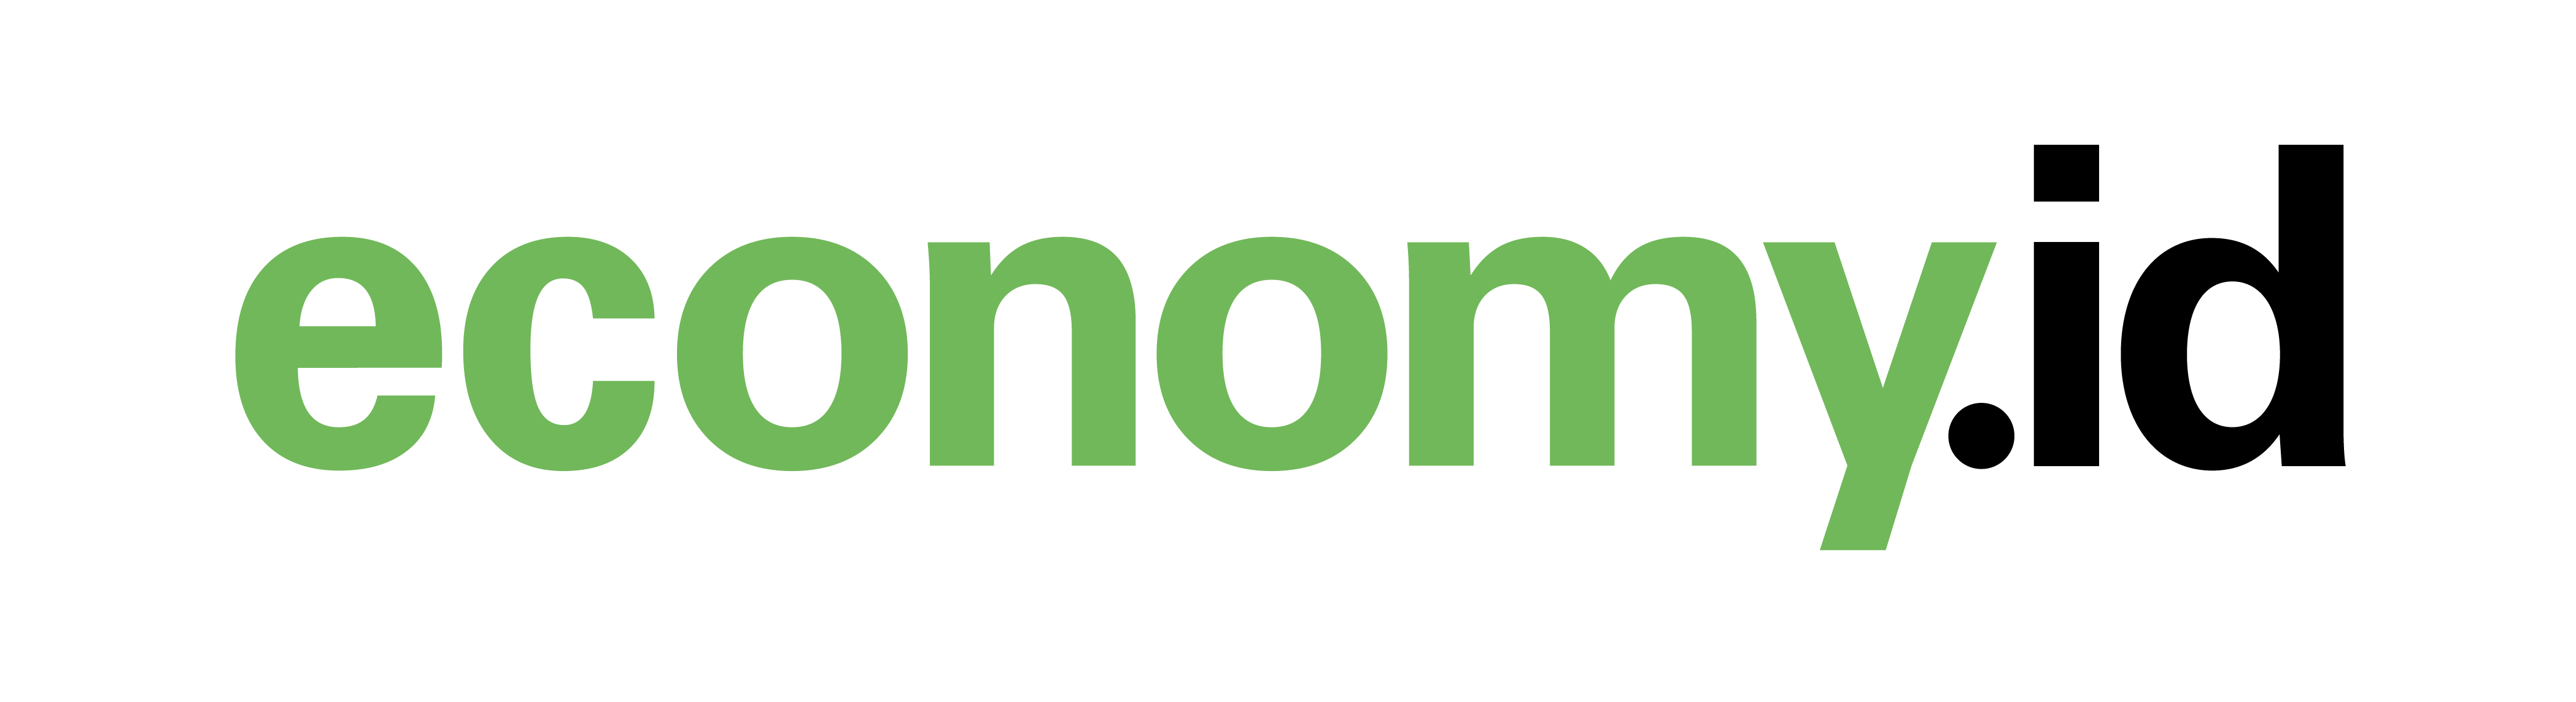 Economy ID logo